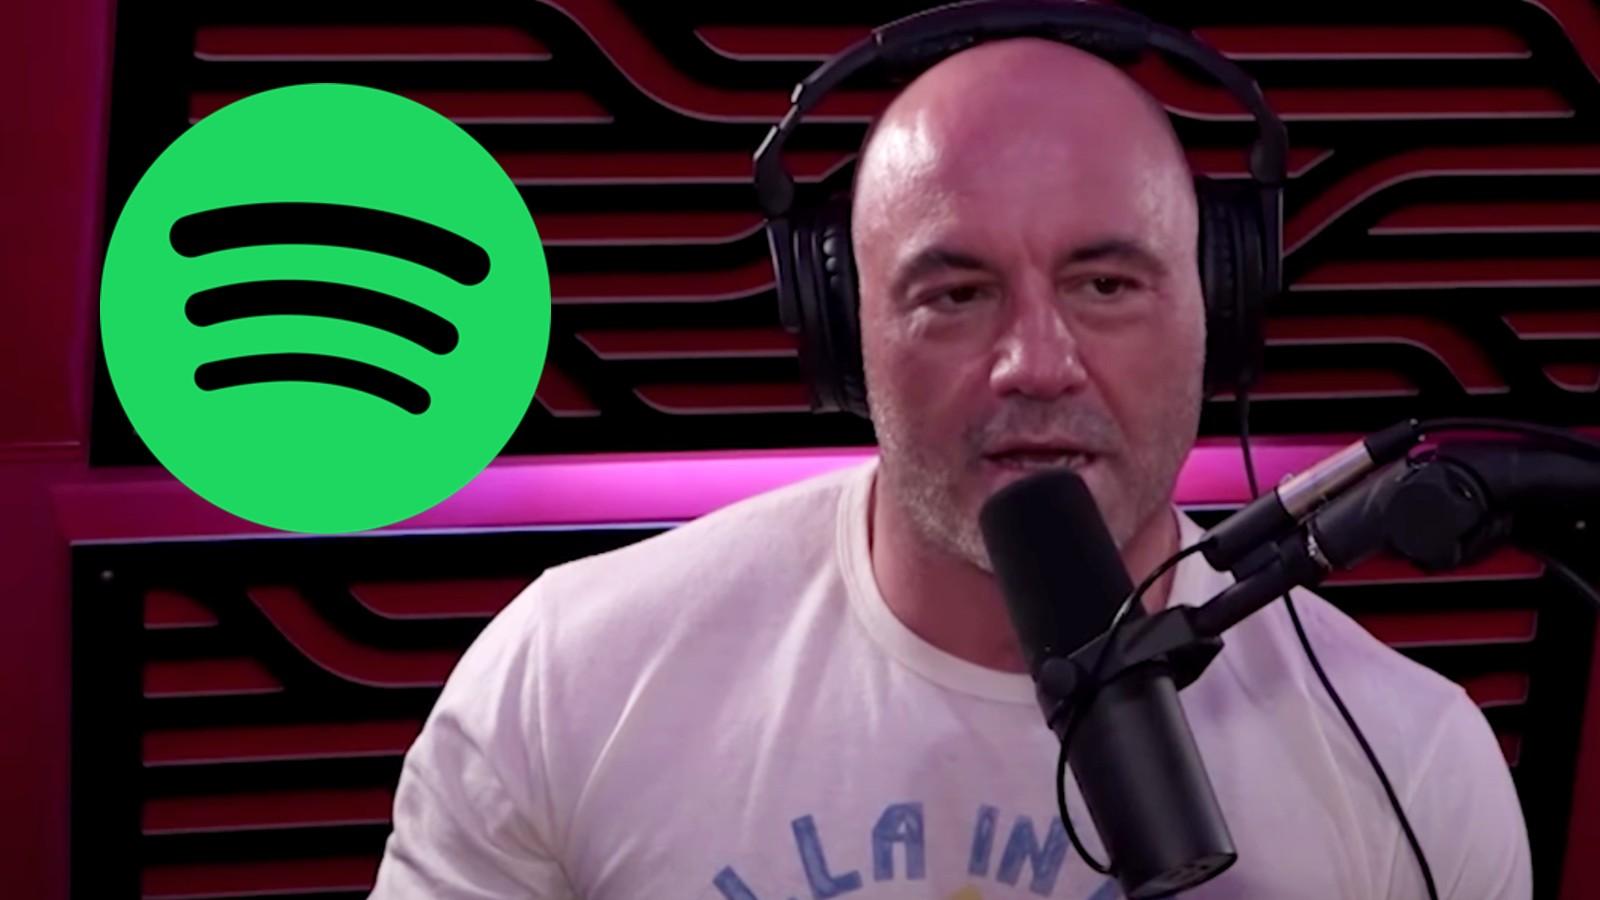 Joe Rogan in his podcast studio next to the Spotify logo